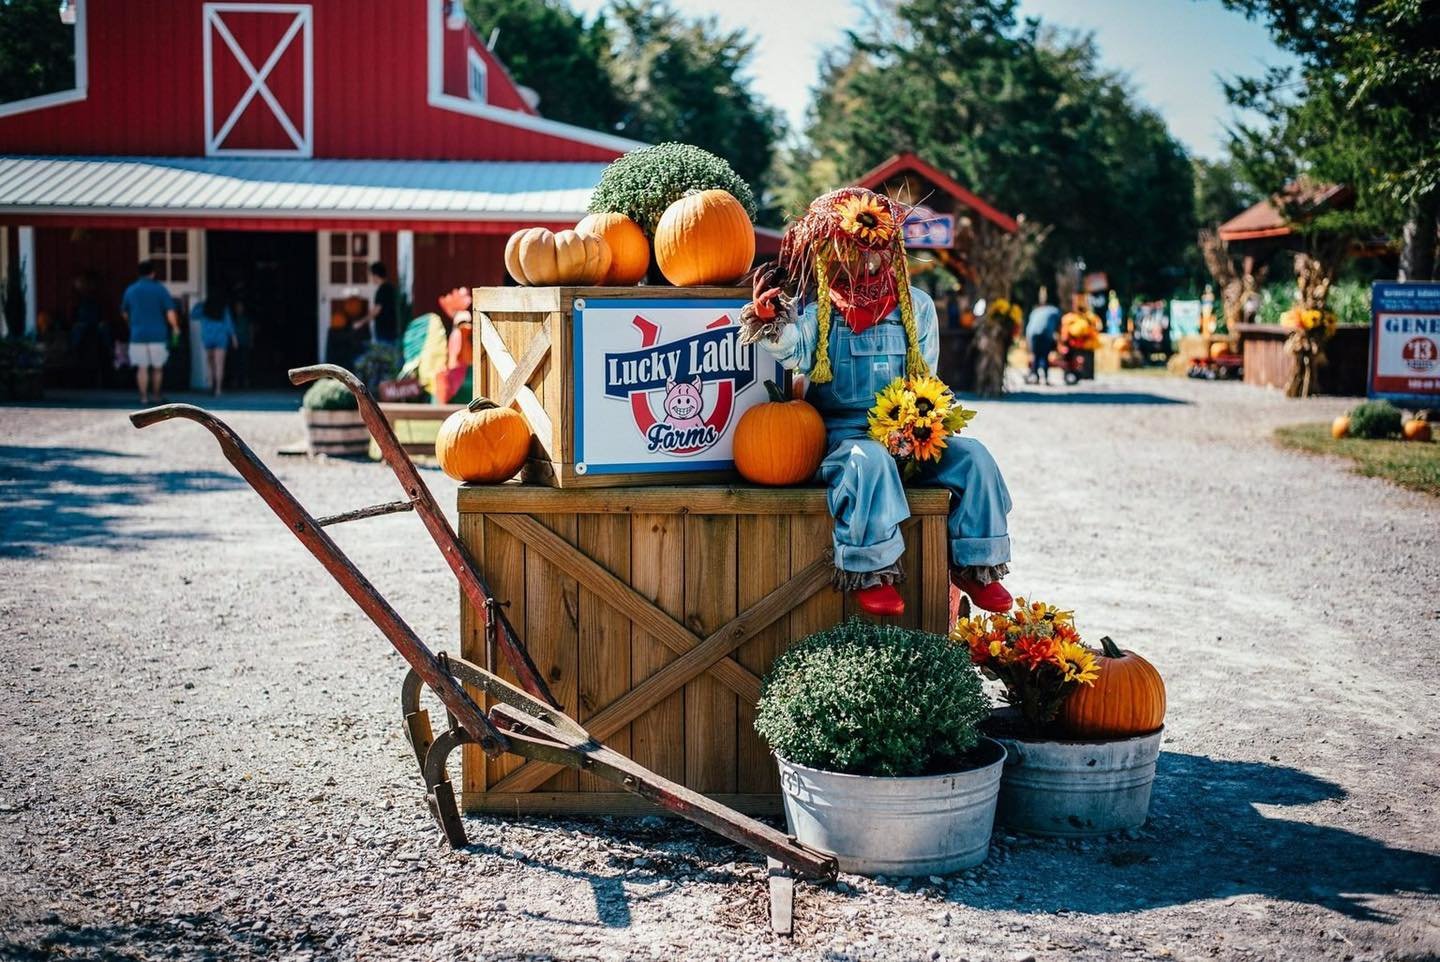 Lucky Ladd Farm best pumpkin patch in Tennessee